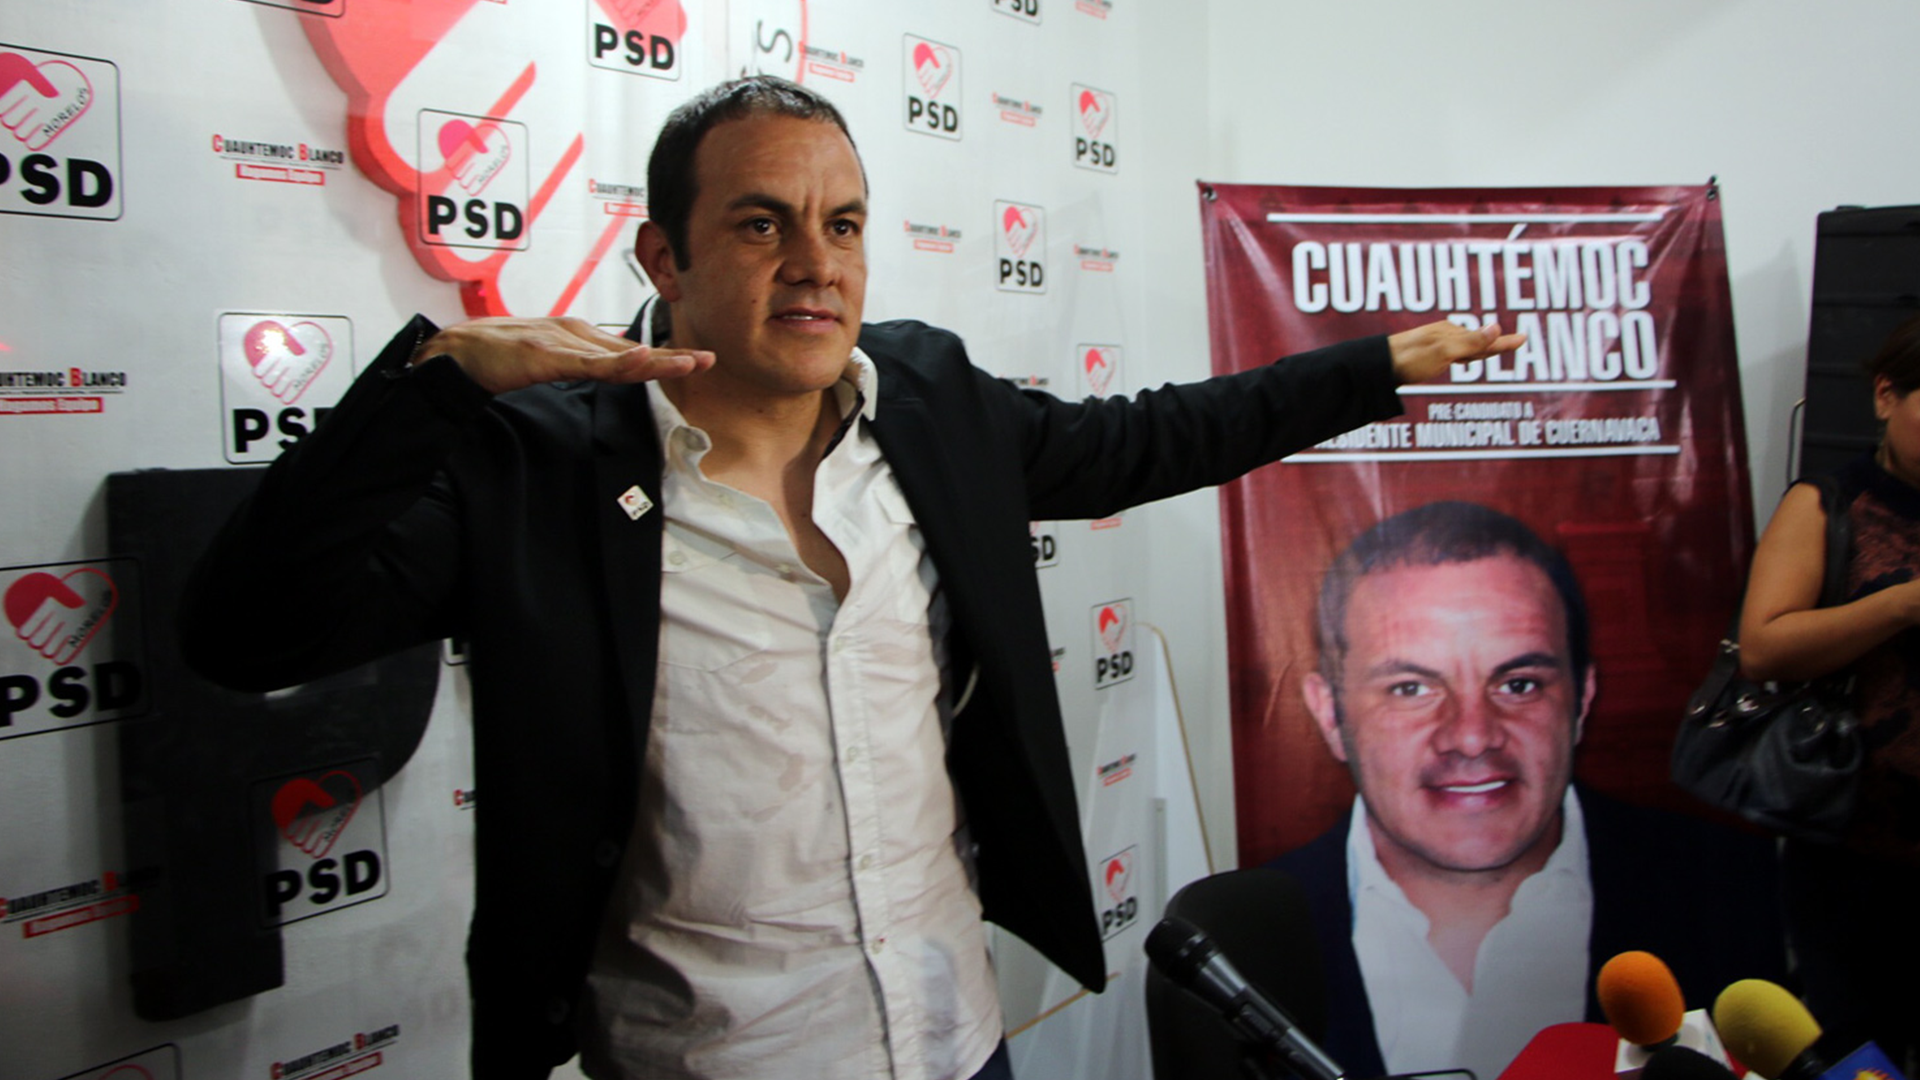 Cuauhtémoc Blanco sí firmó contrato millonario para ser candidato: Fiscalía